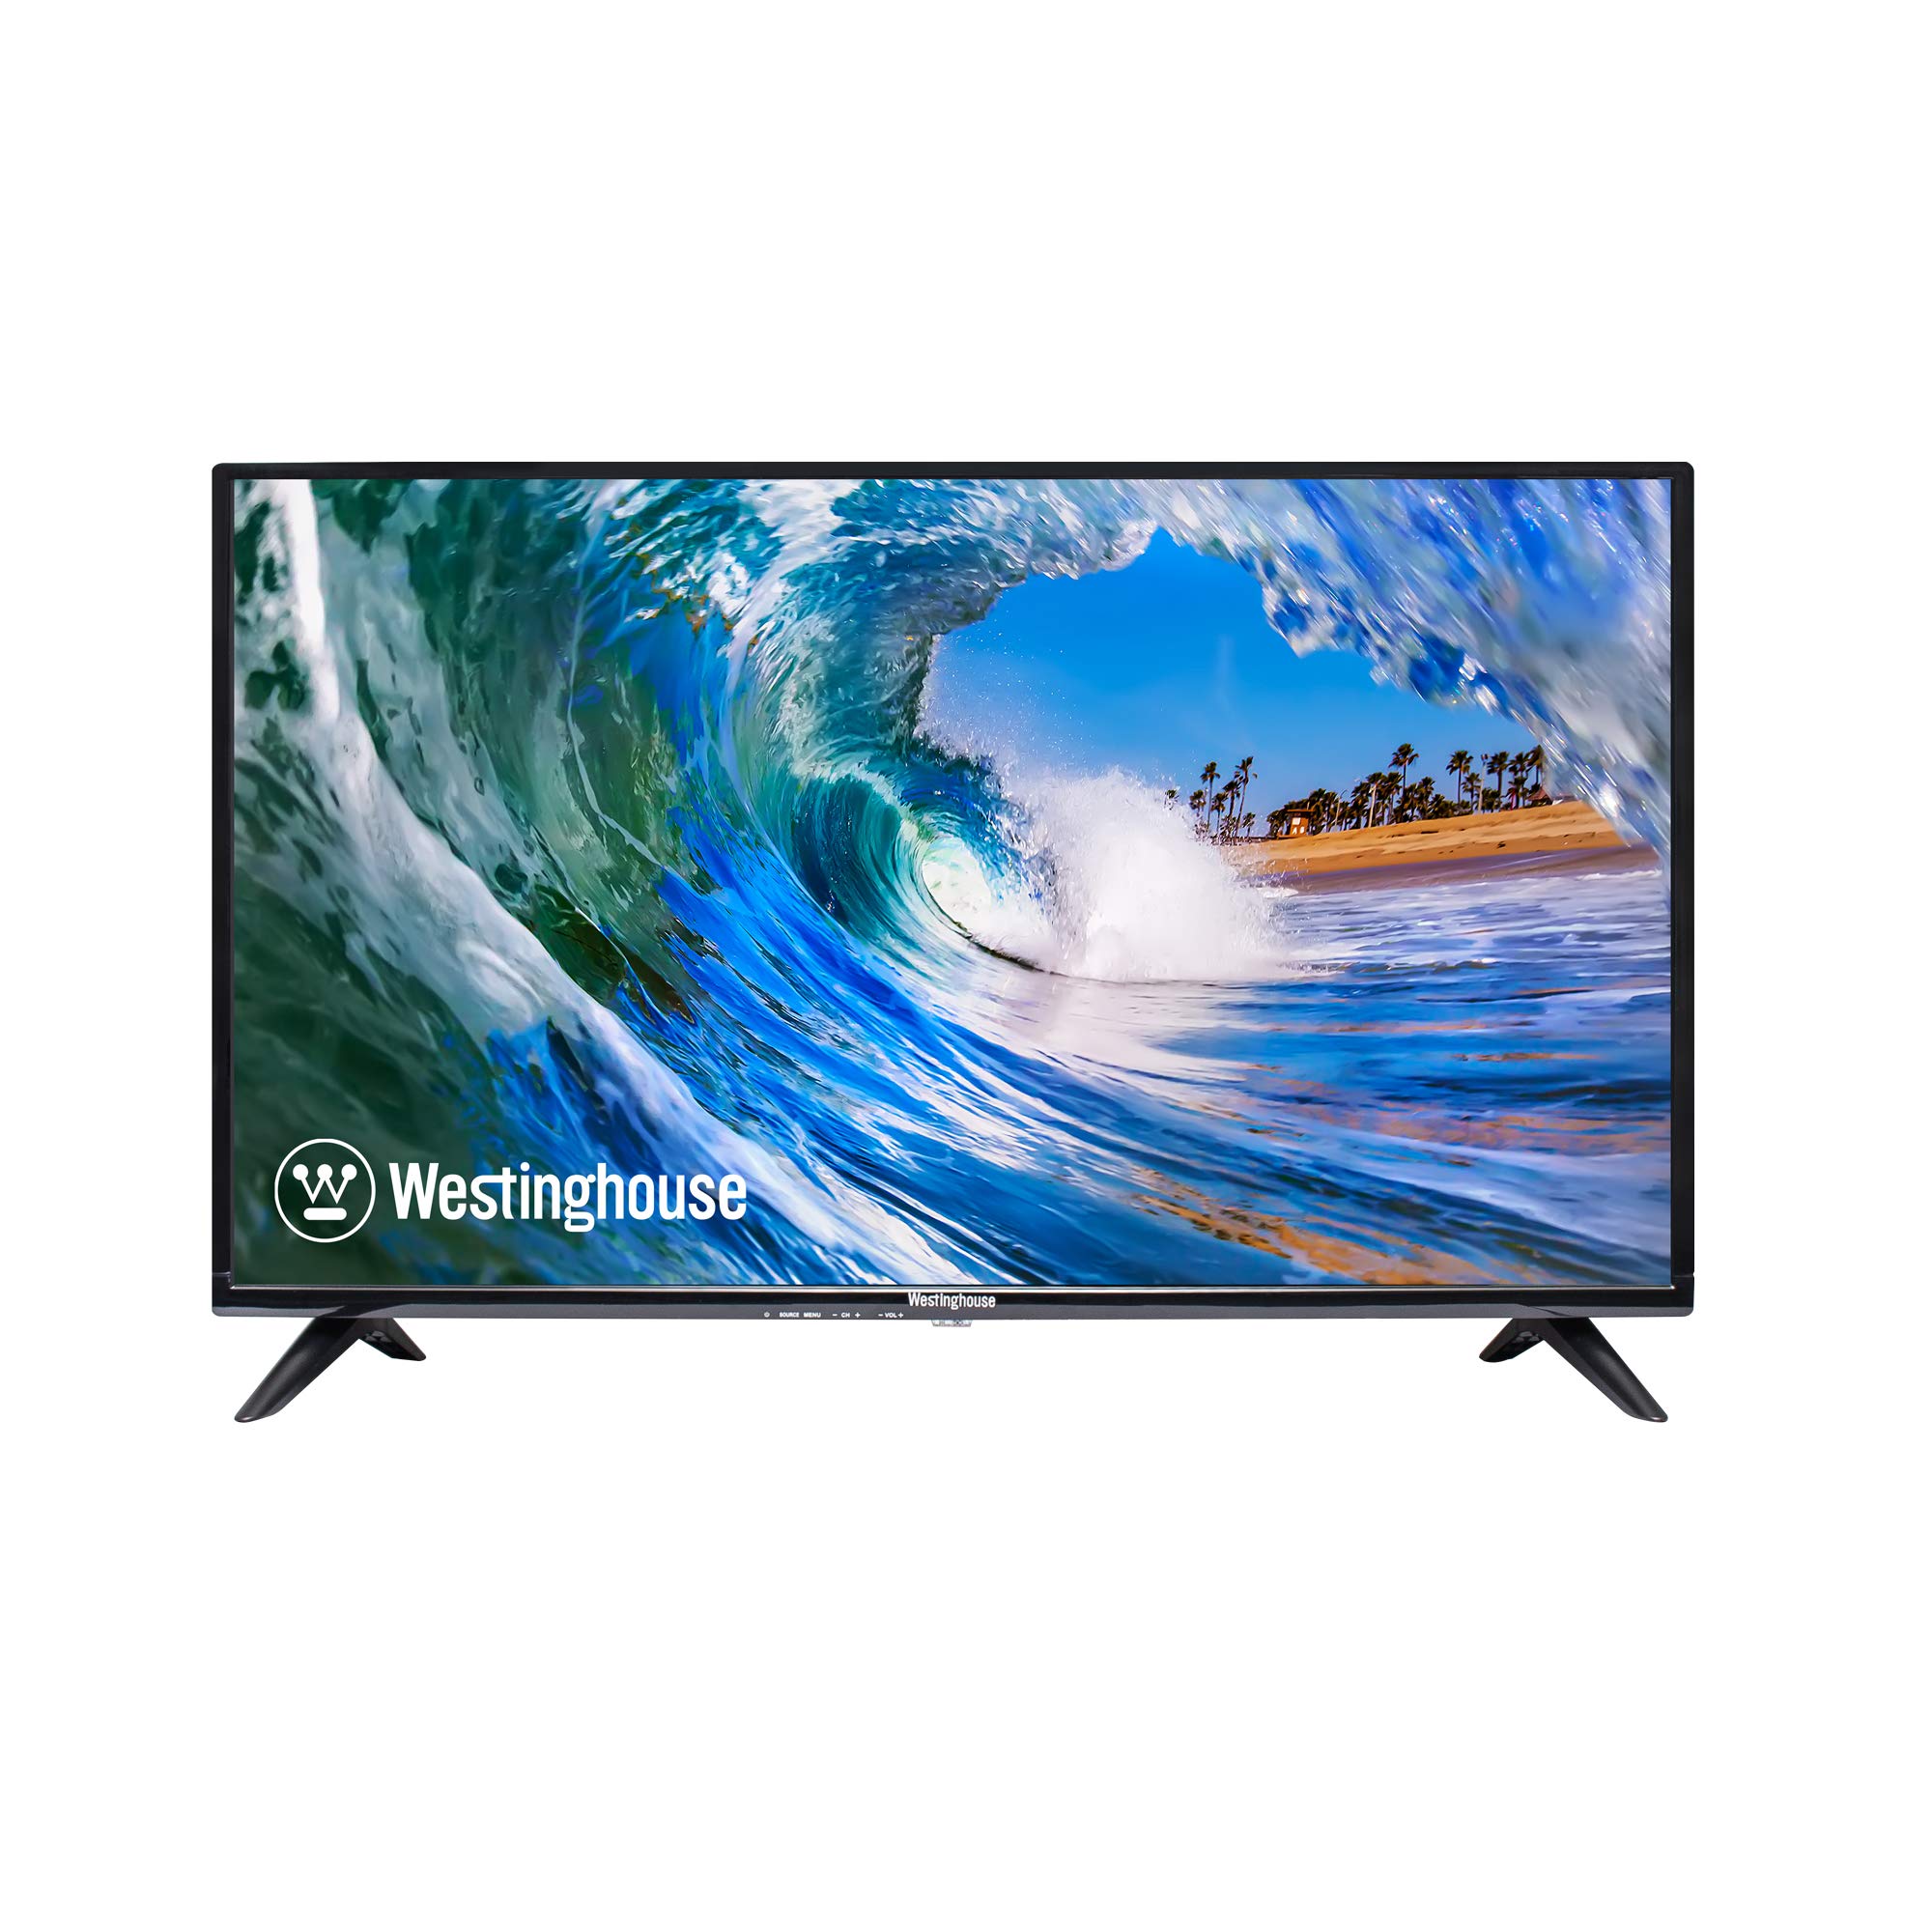 Westinghouse - 32" Class - LED - 720p - HDTV - Refrubished - Grade B WD32HB1120-C_B UPC  - WESTINGHOUSE ELECTRIC